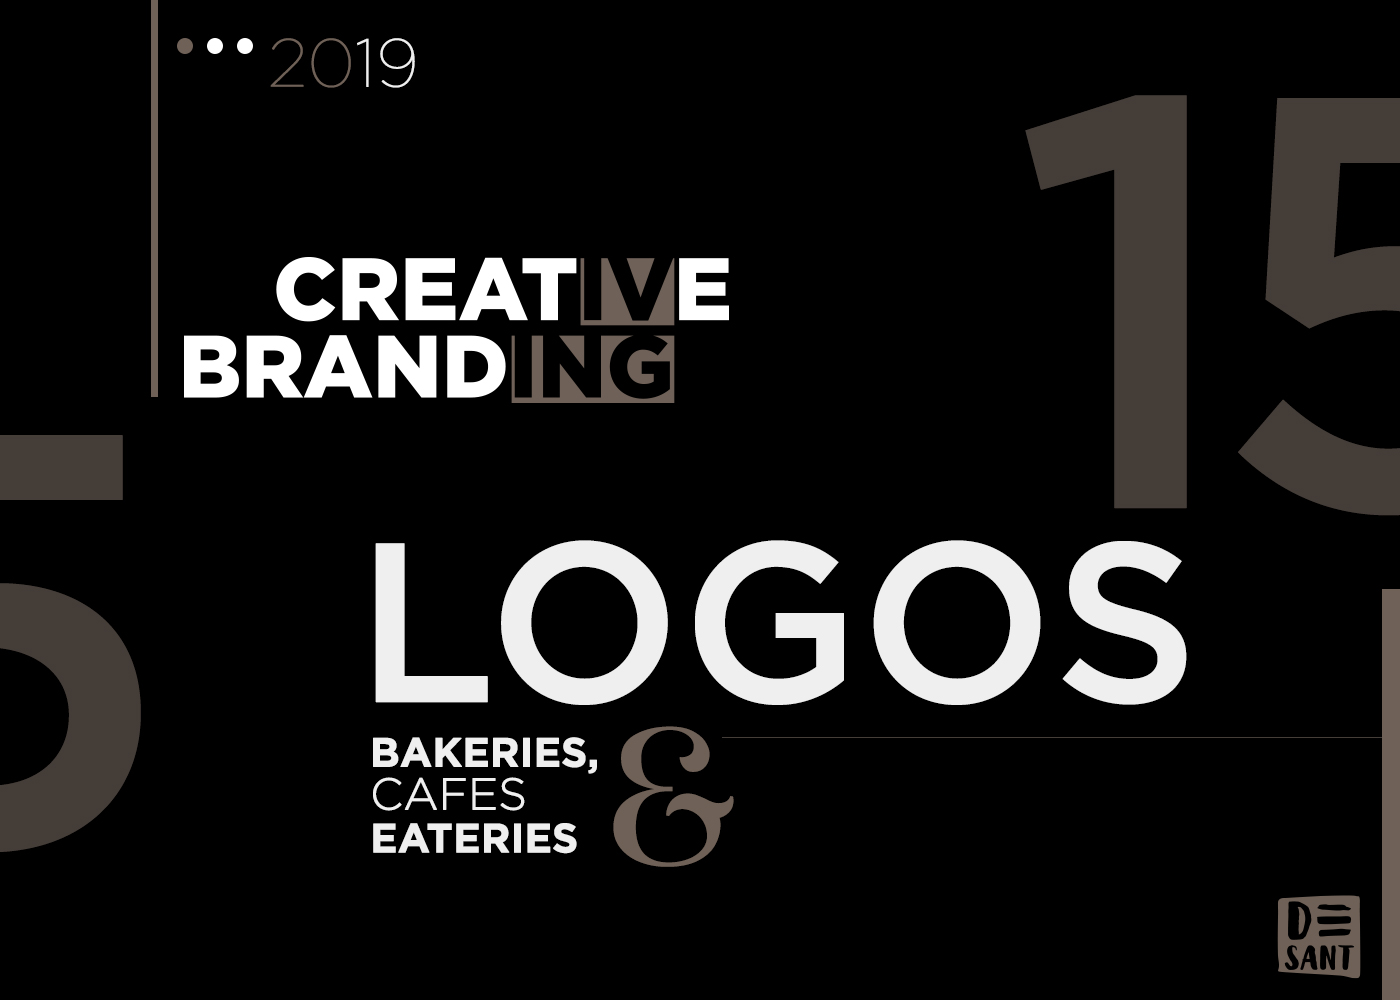 bakery & cafe logos in 2019